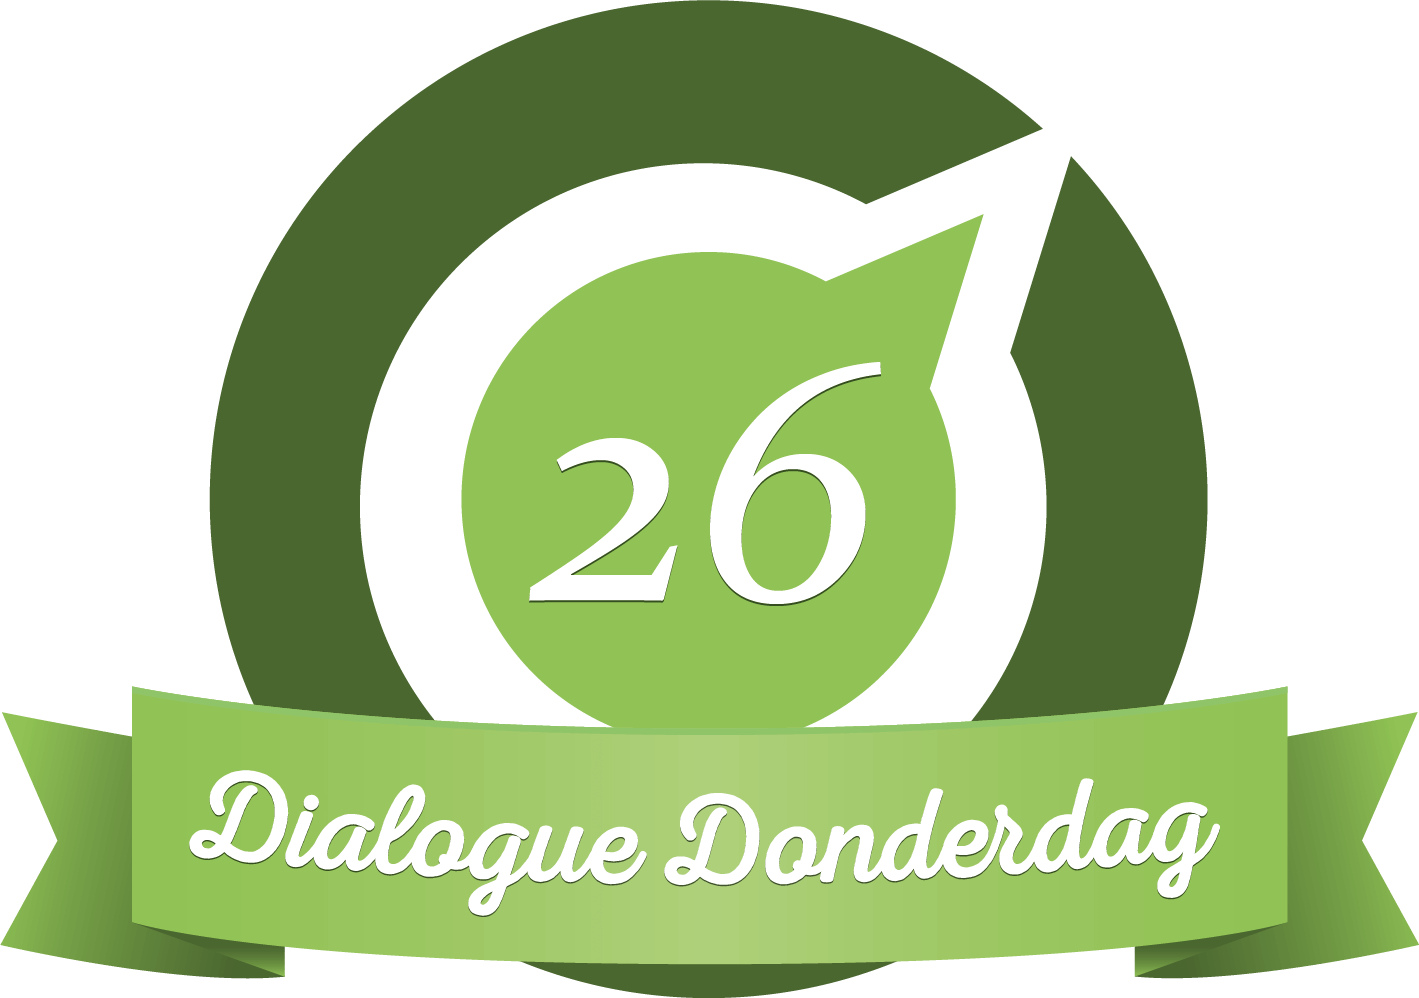 15 februari 2018: Dialogue Donderdag #26 over de GDPR